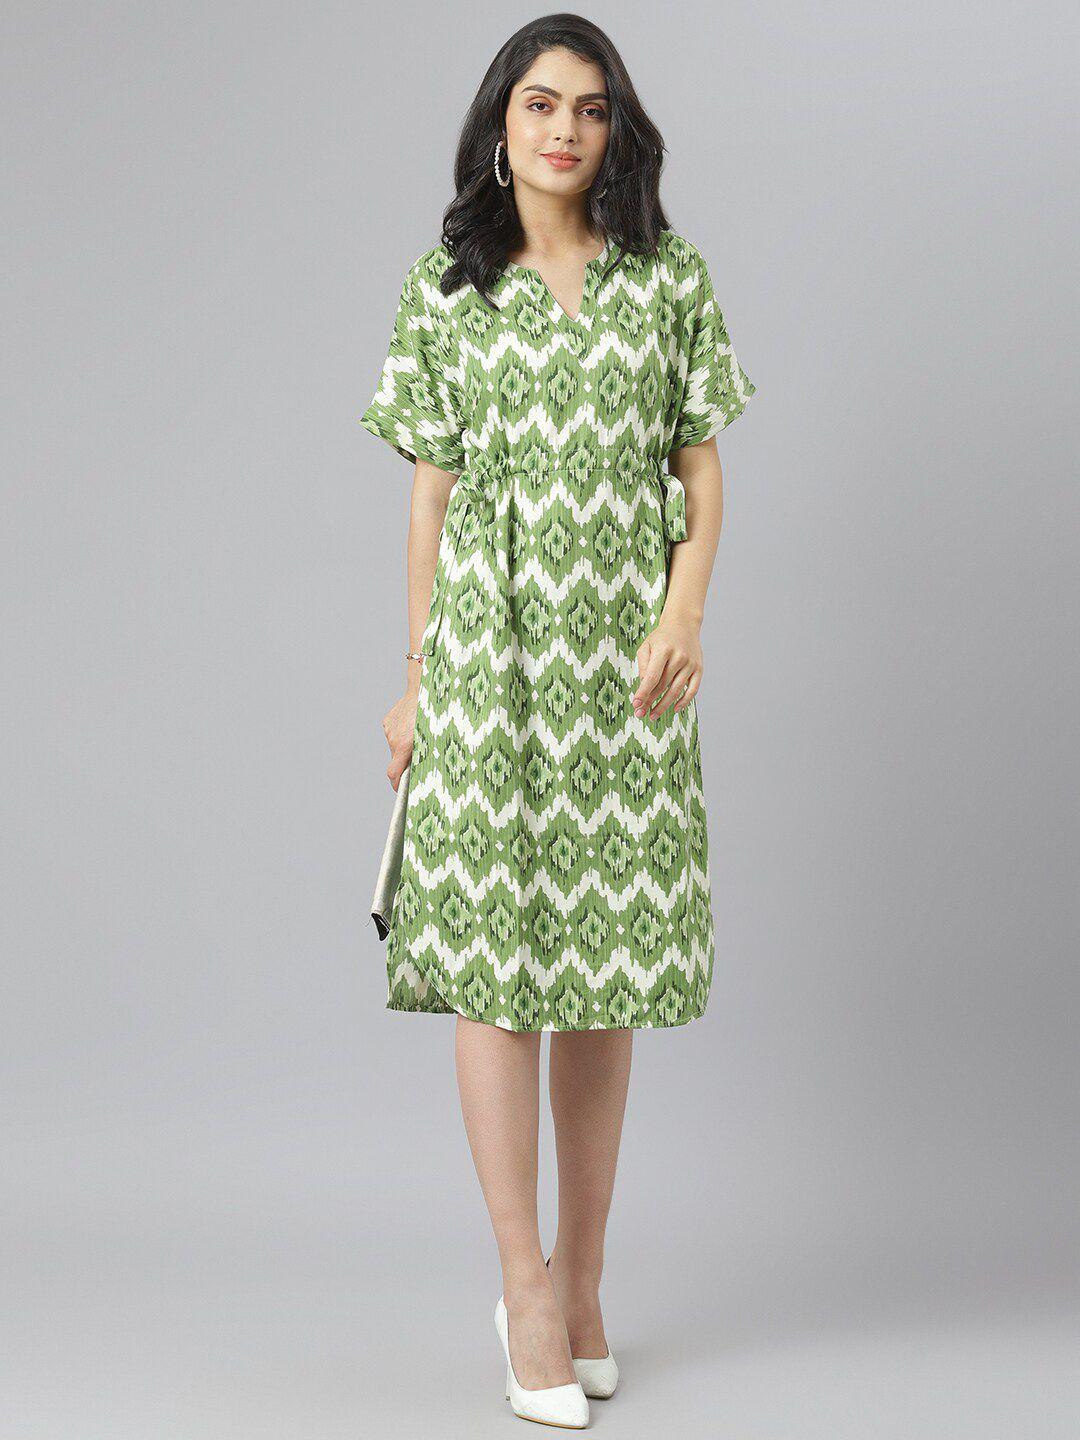 am ma green & white geometric printed a-line dress